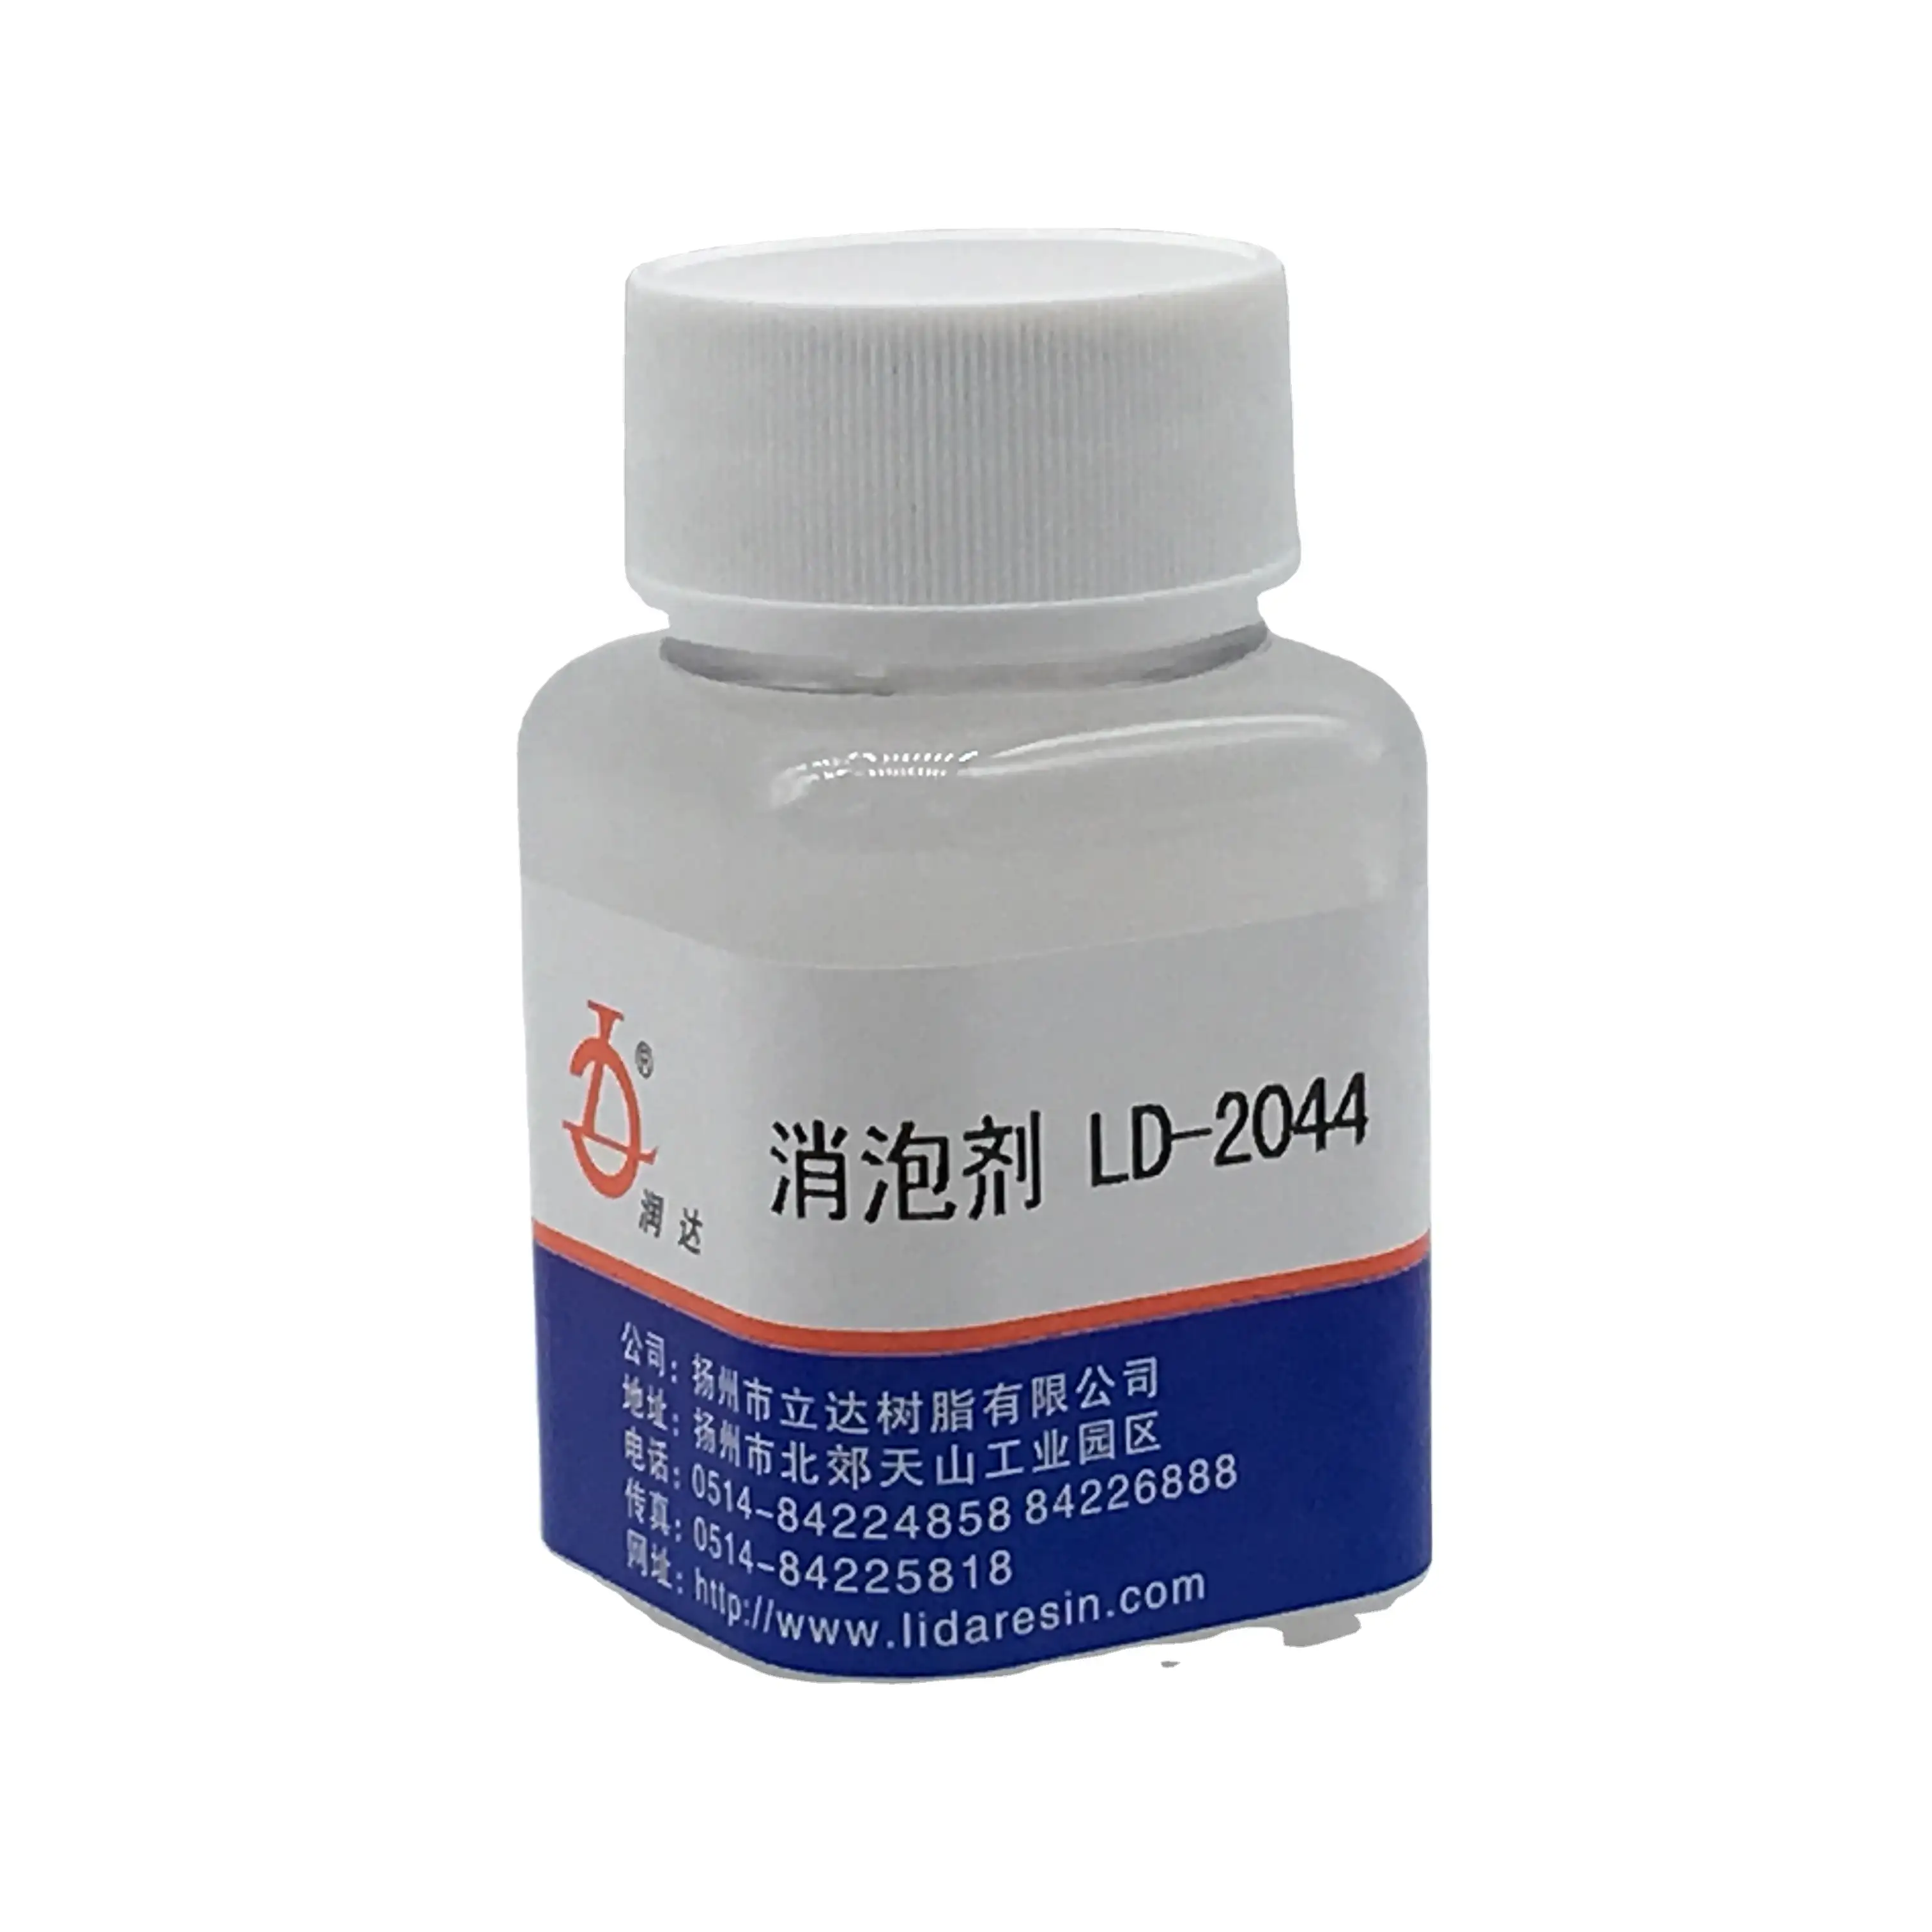 Antiespumante antiespumante China de silicona de fabricación aditivo poliéter-modificado siloxano de silicona antiespumante LD-2044